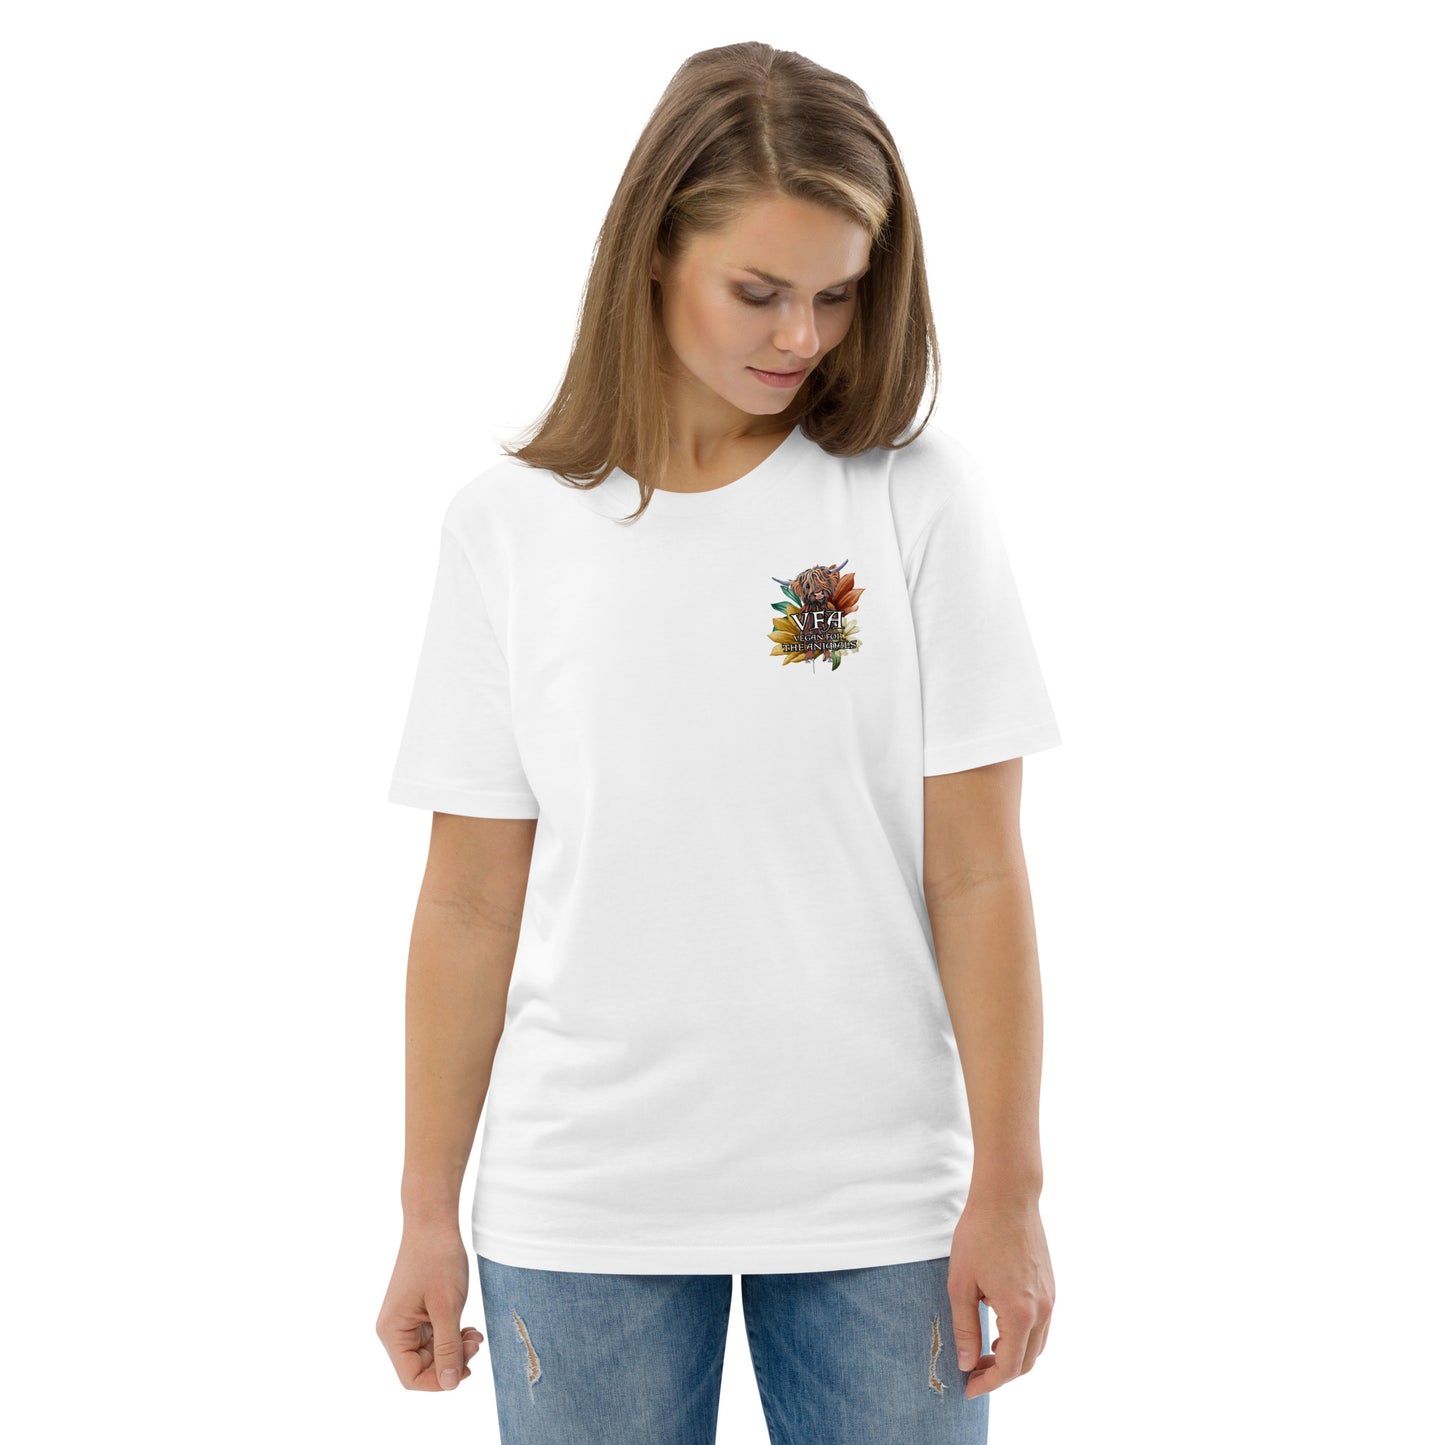 VEGAN For The Animals Unisex organic cotton t-shirt